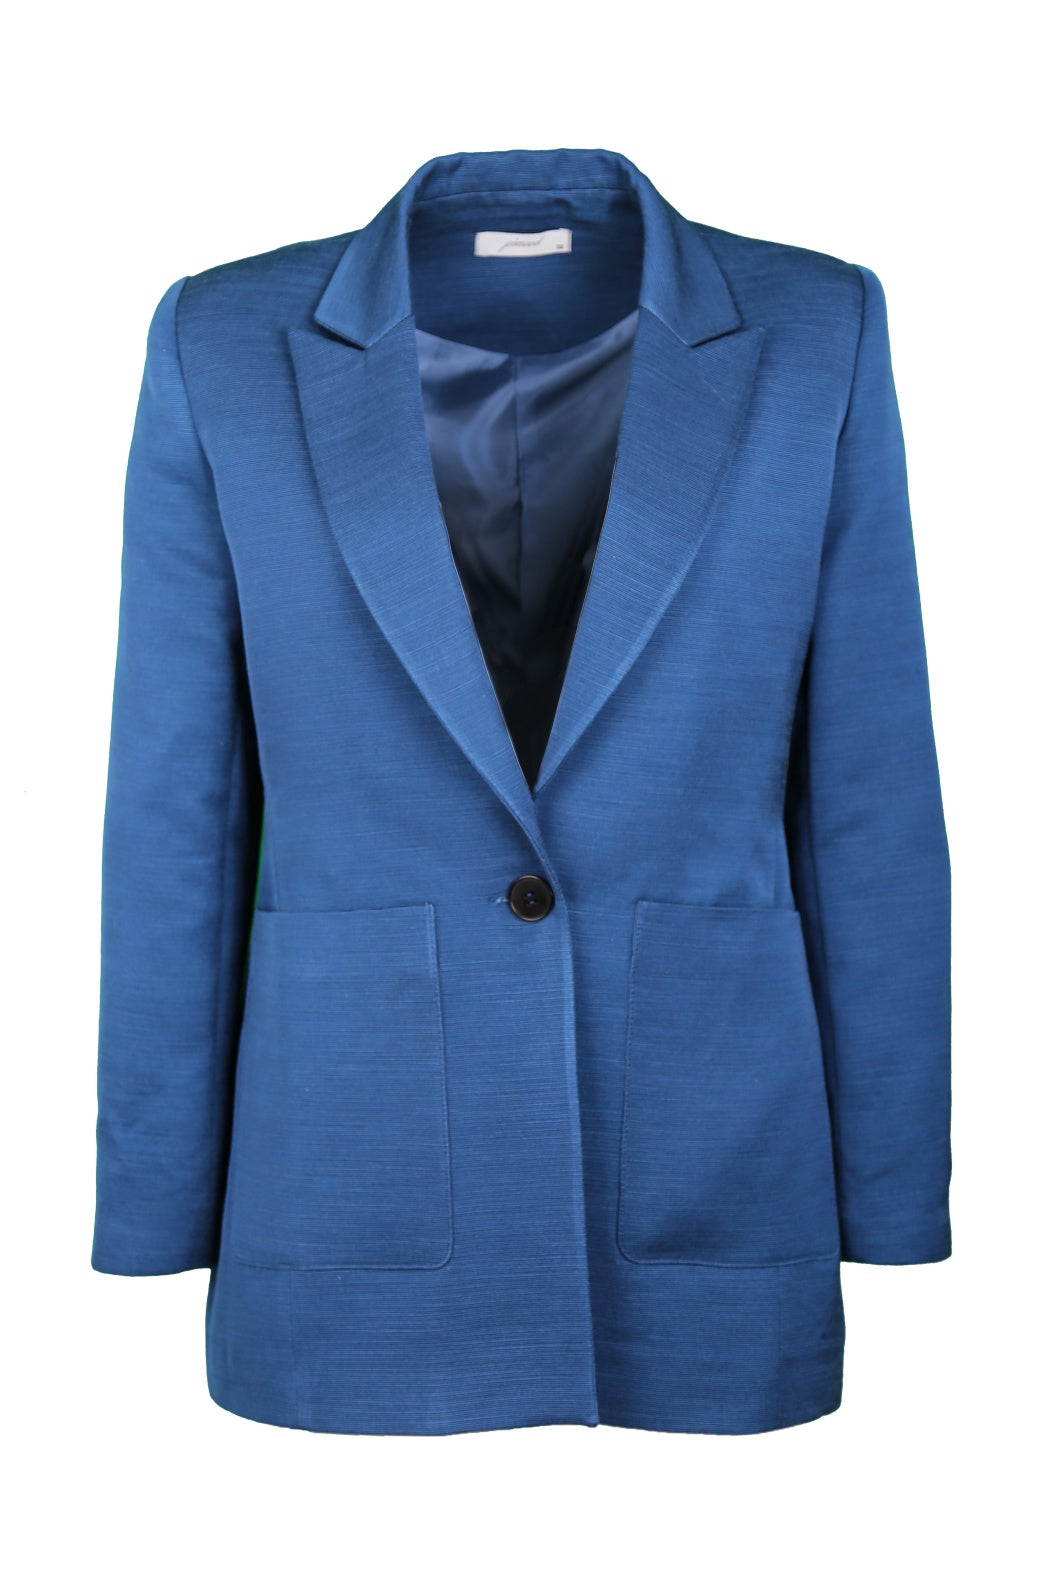 Bold Blue Blazer Jacket